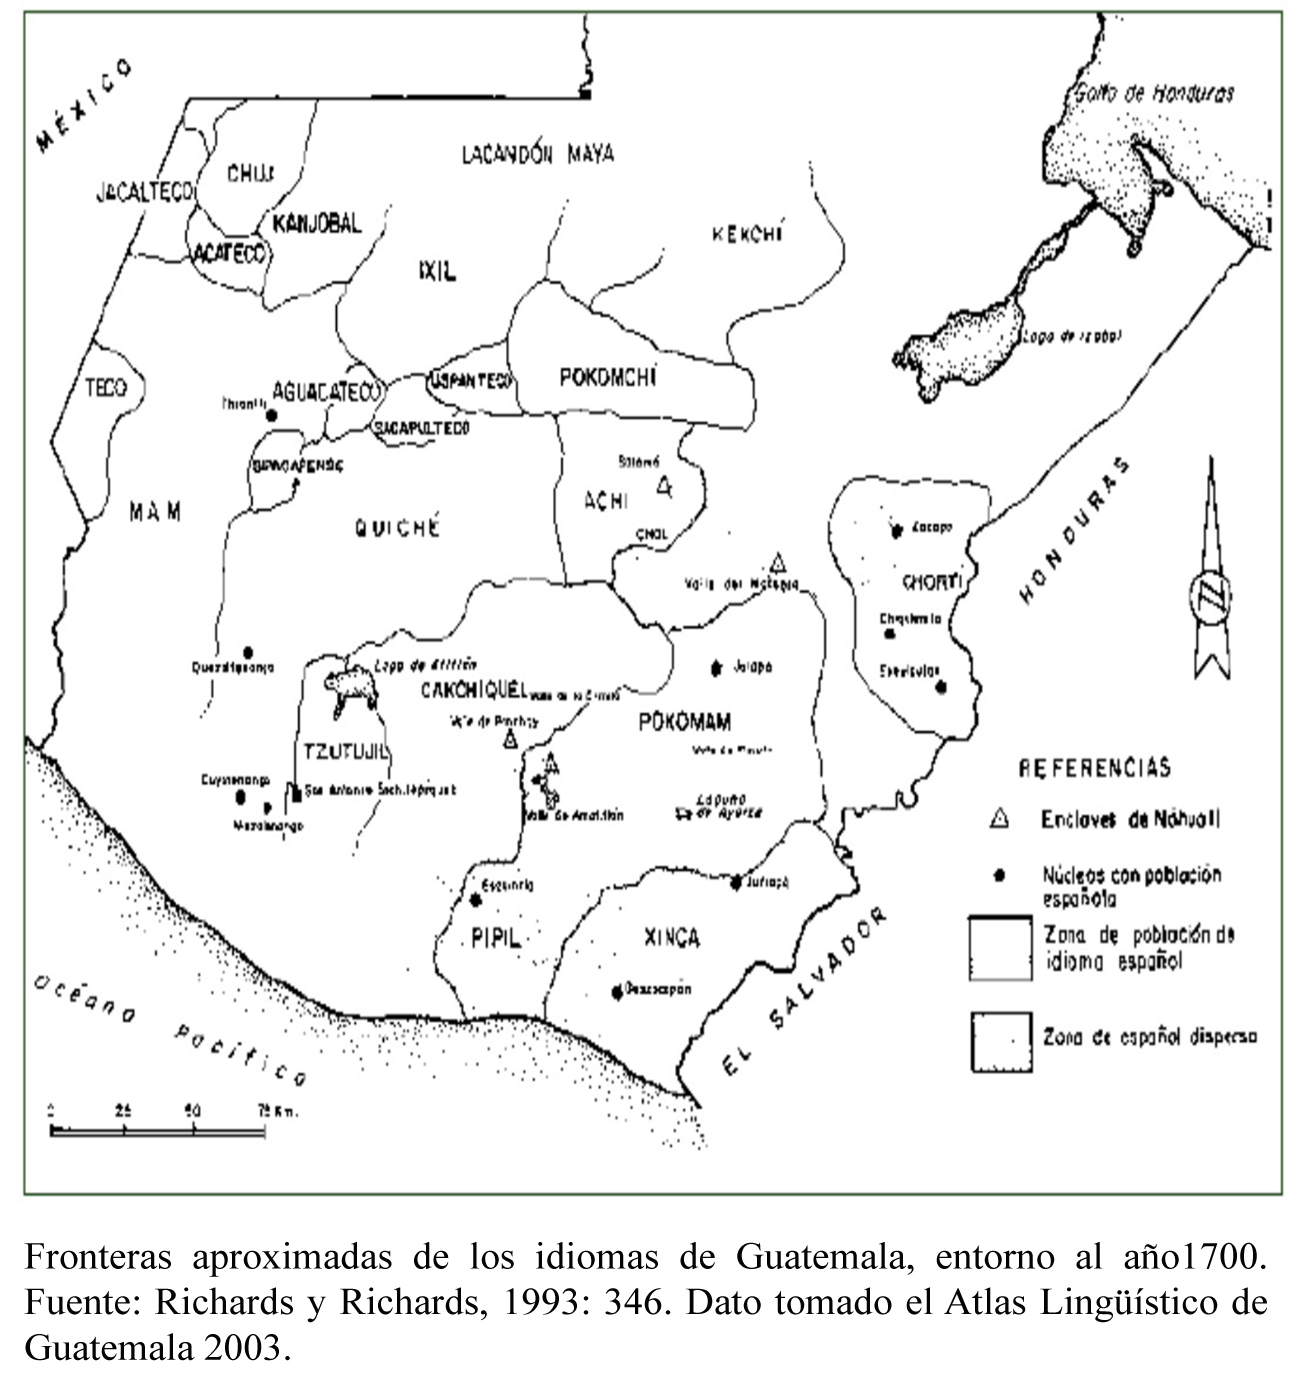 ALISPOQ, Atlas Lingüístico Sonoro del Poqomam